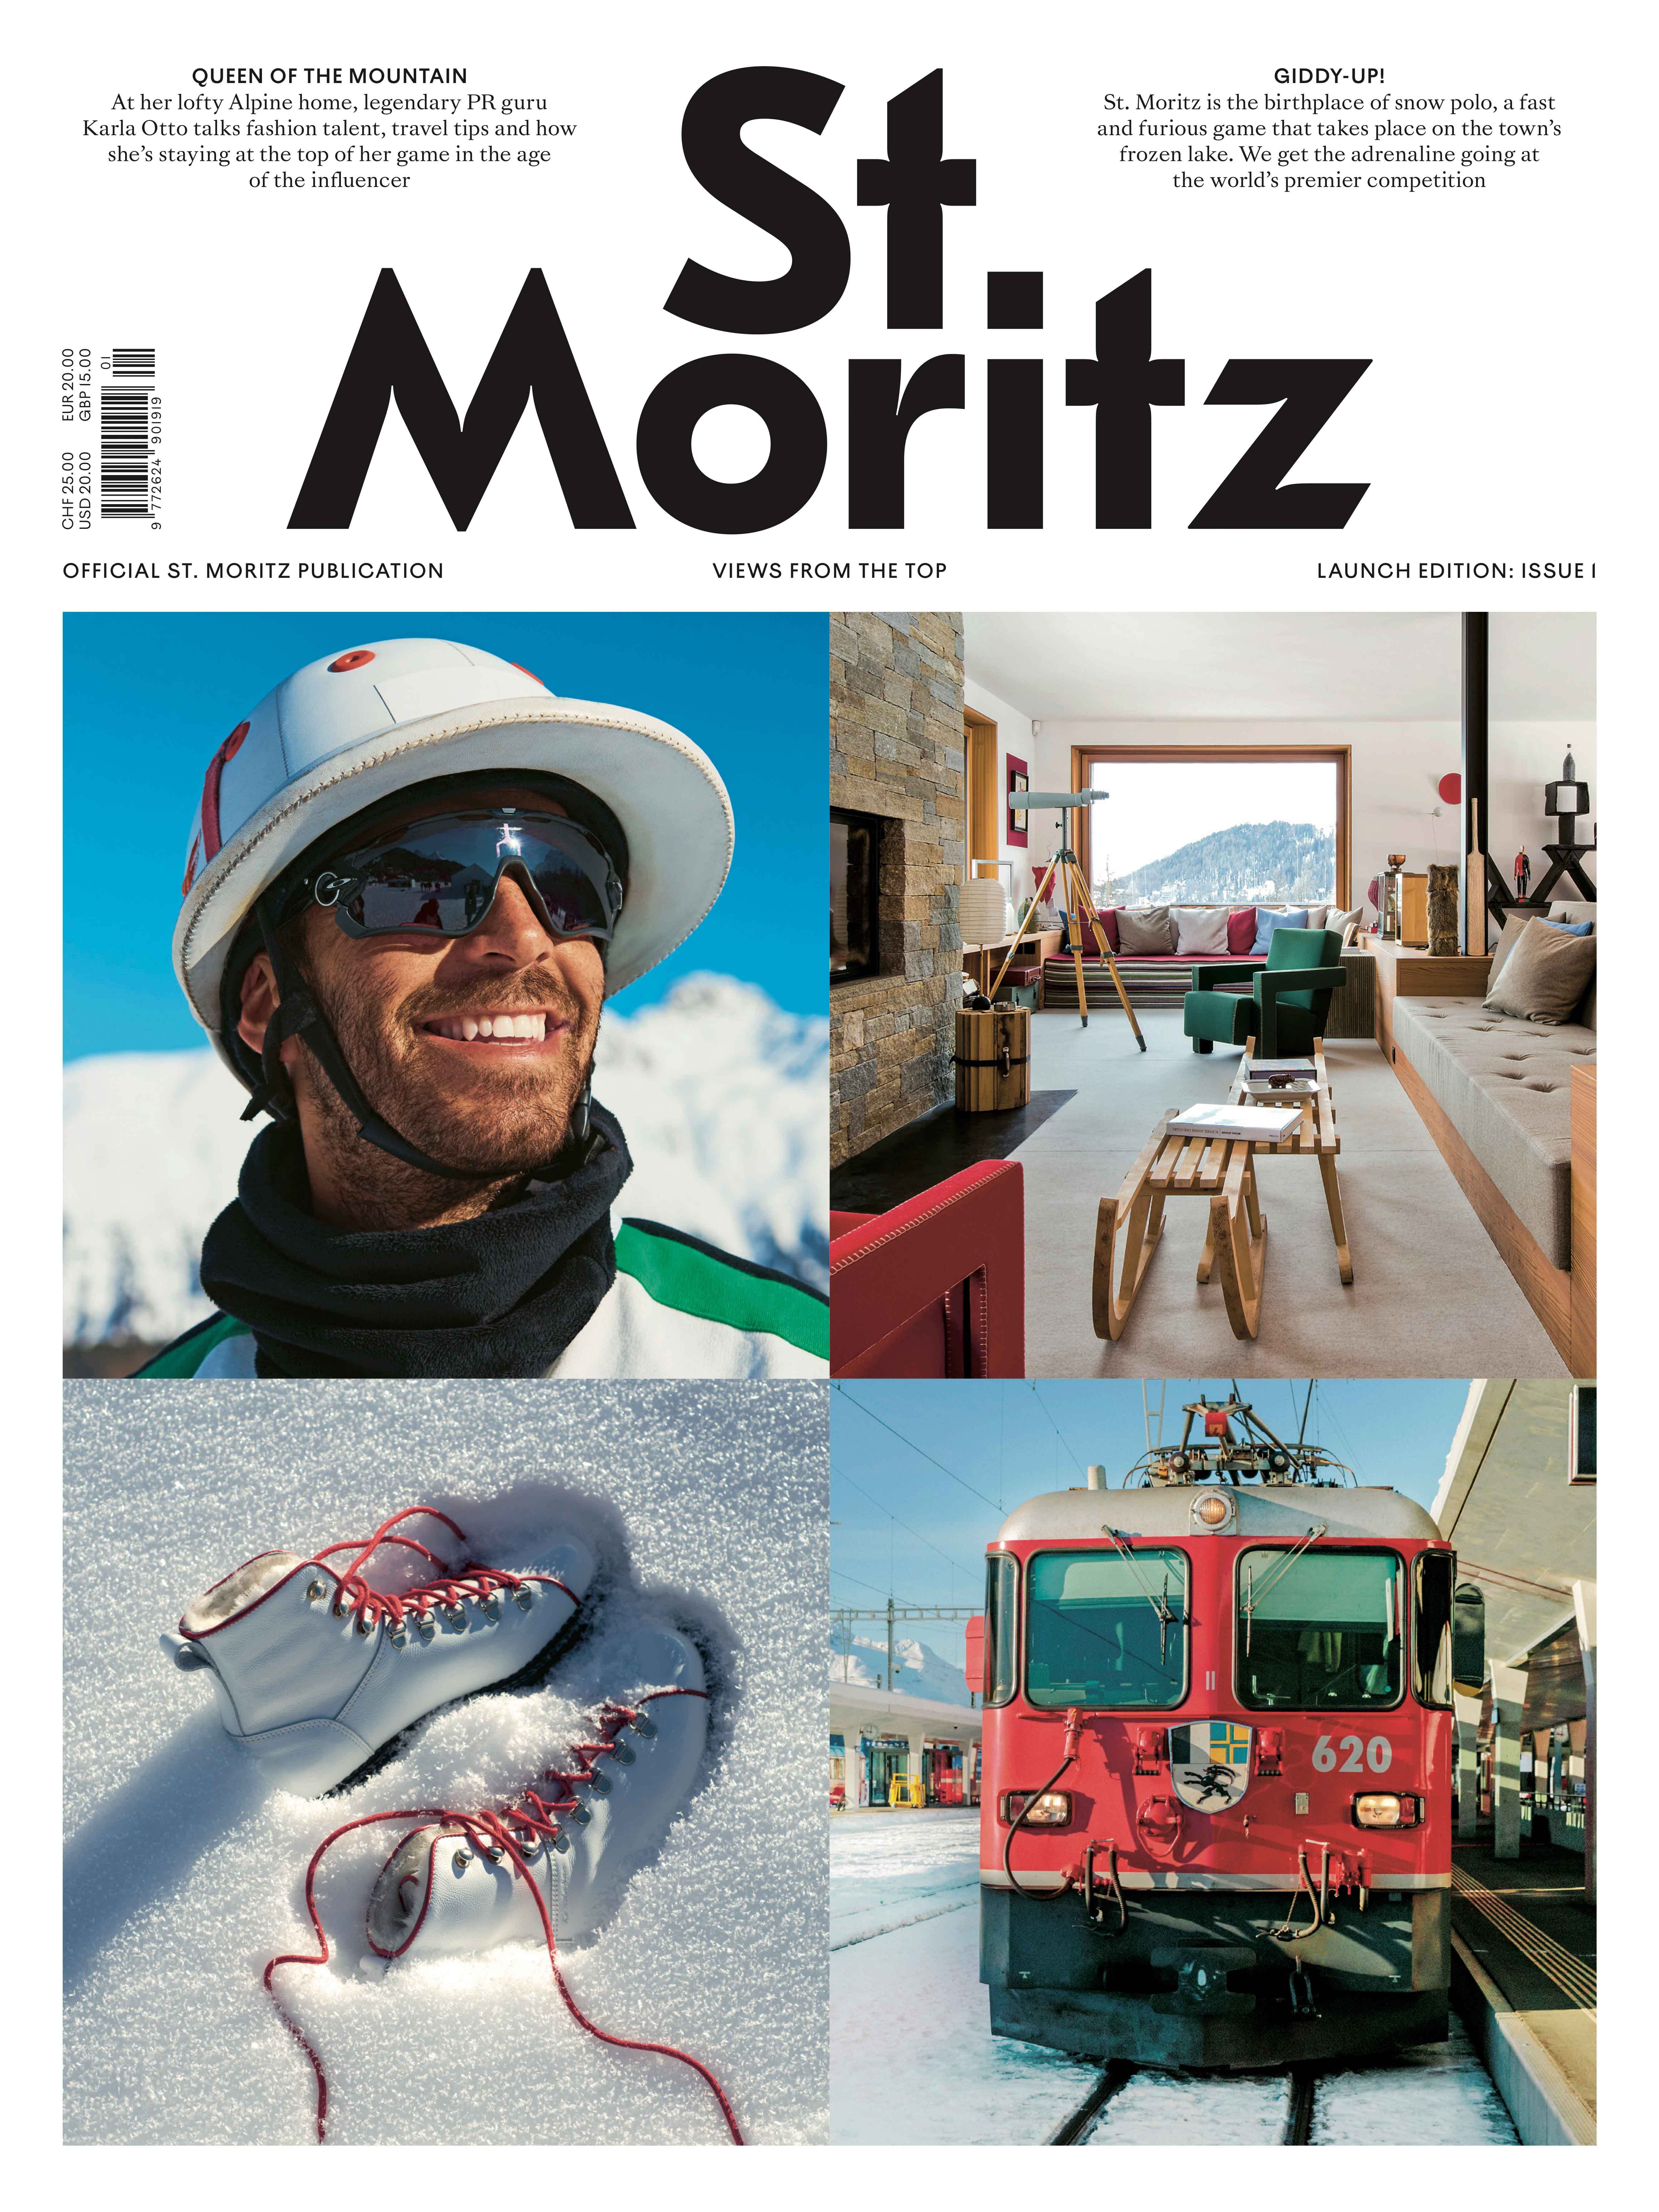 St. Moritz magazine 